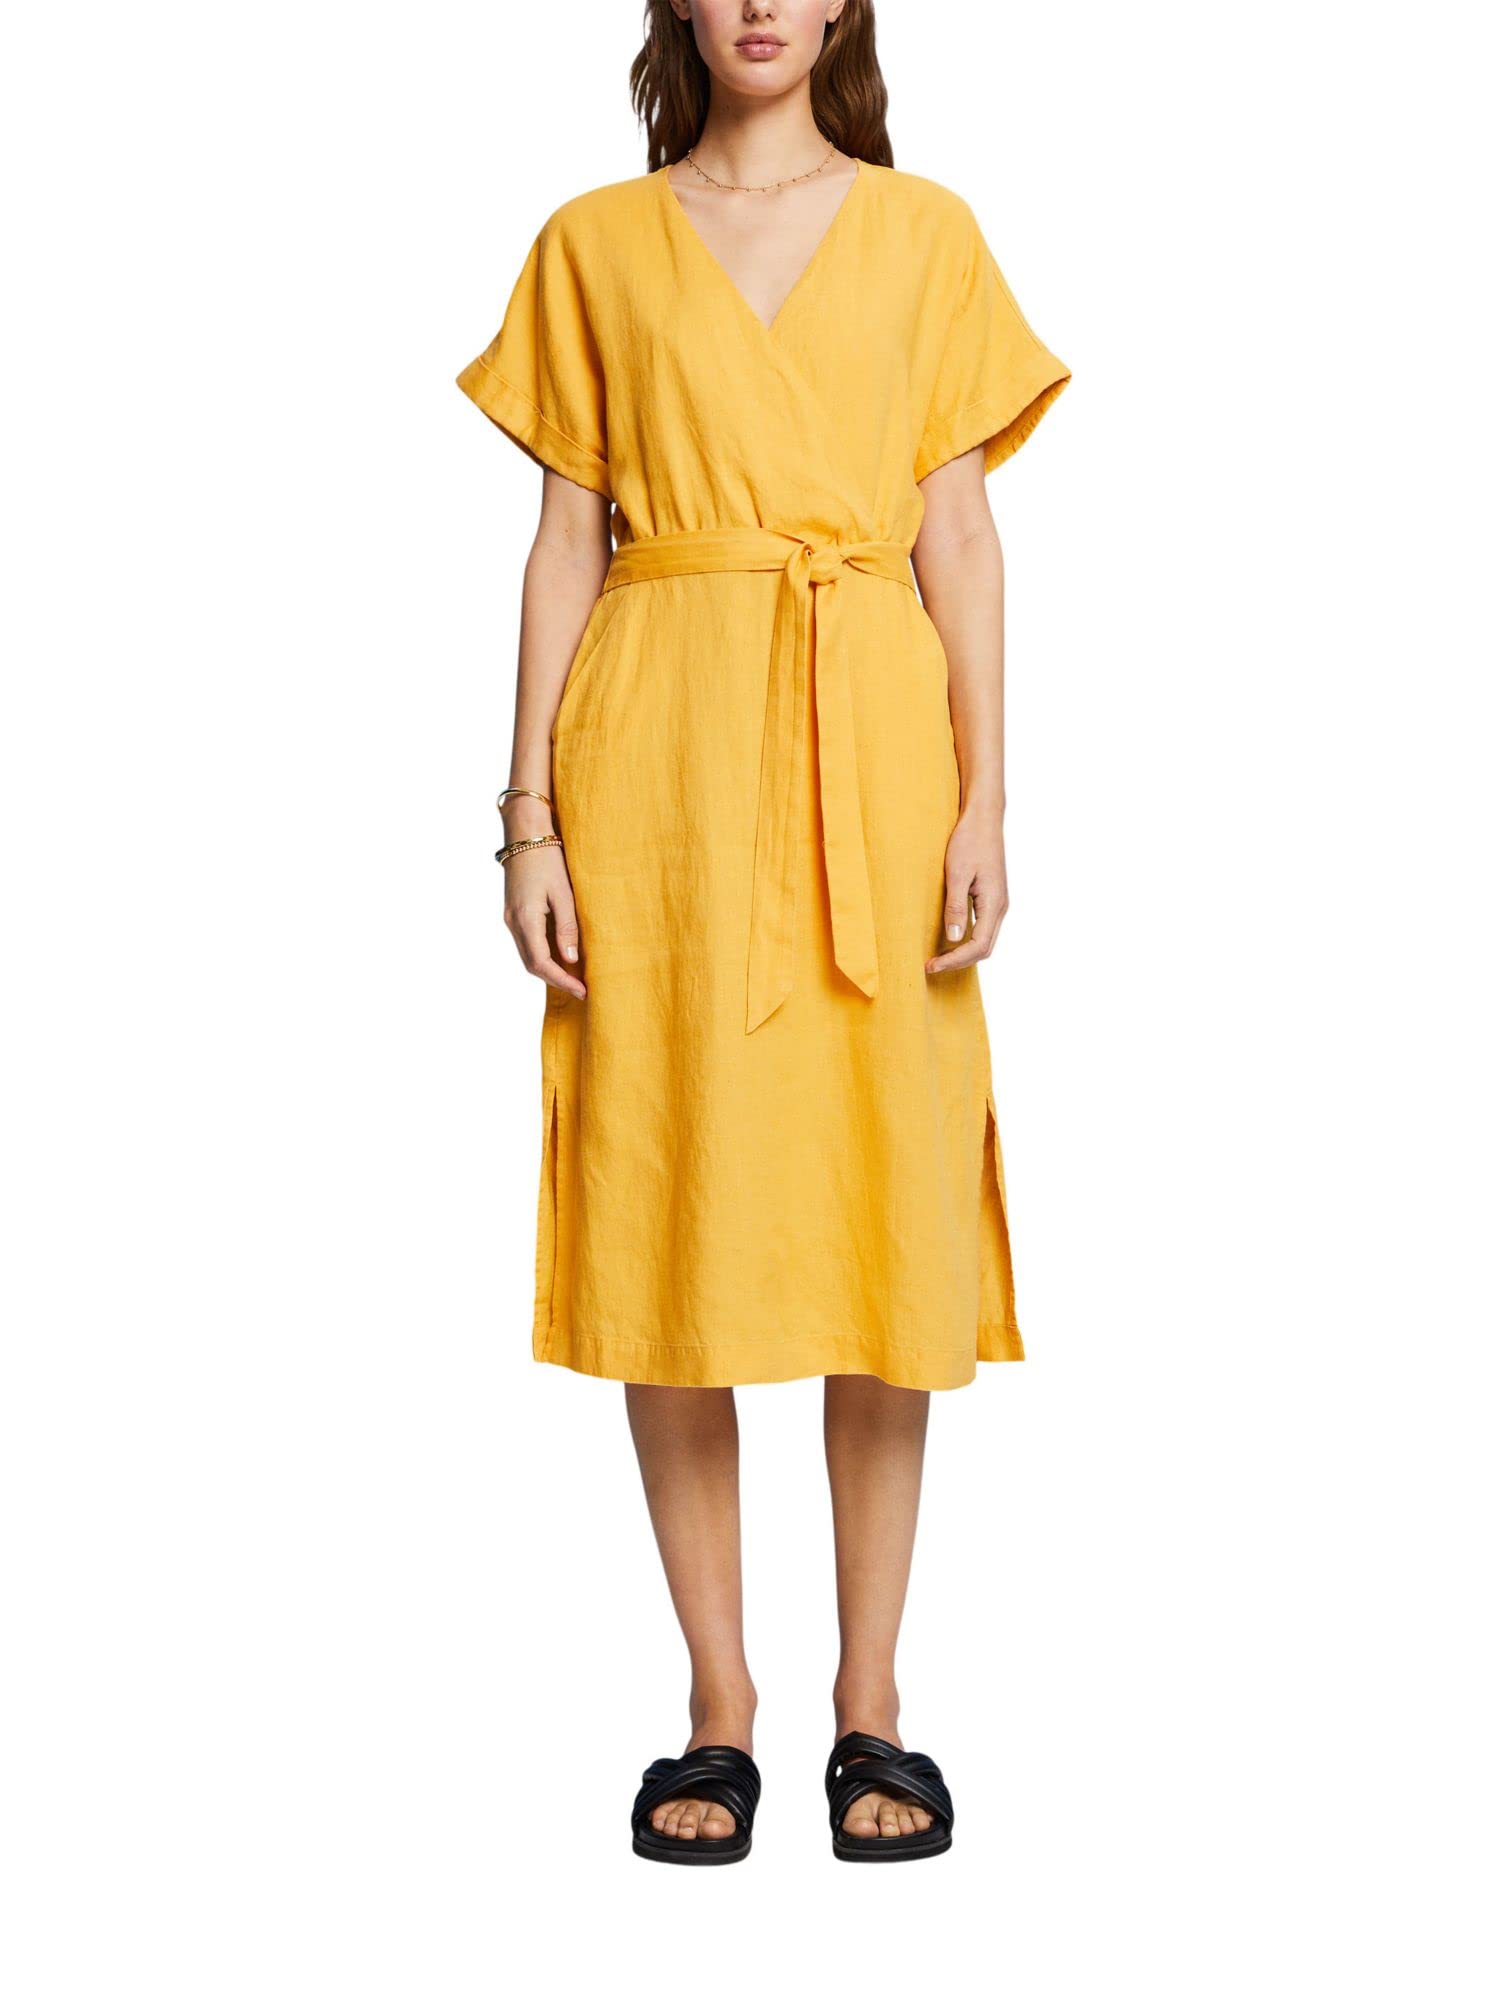 ESPRIT Damen 043EO1E308 Kleid, 730/SUNFLOWER Yellow, 34